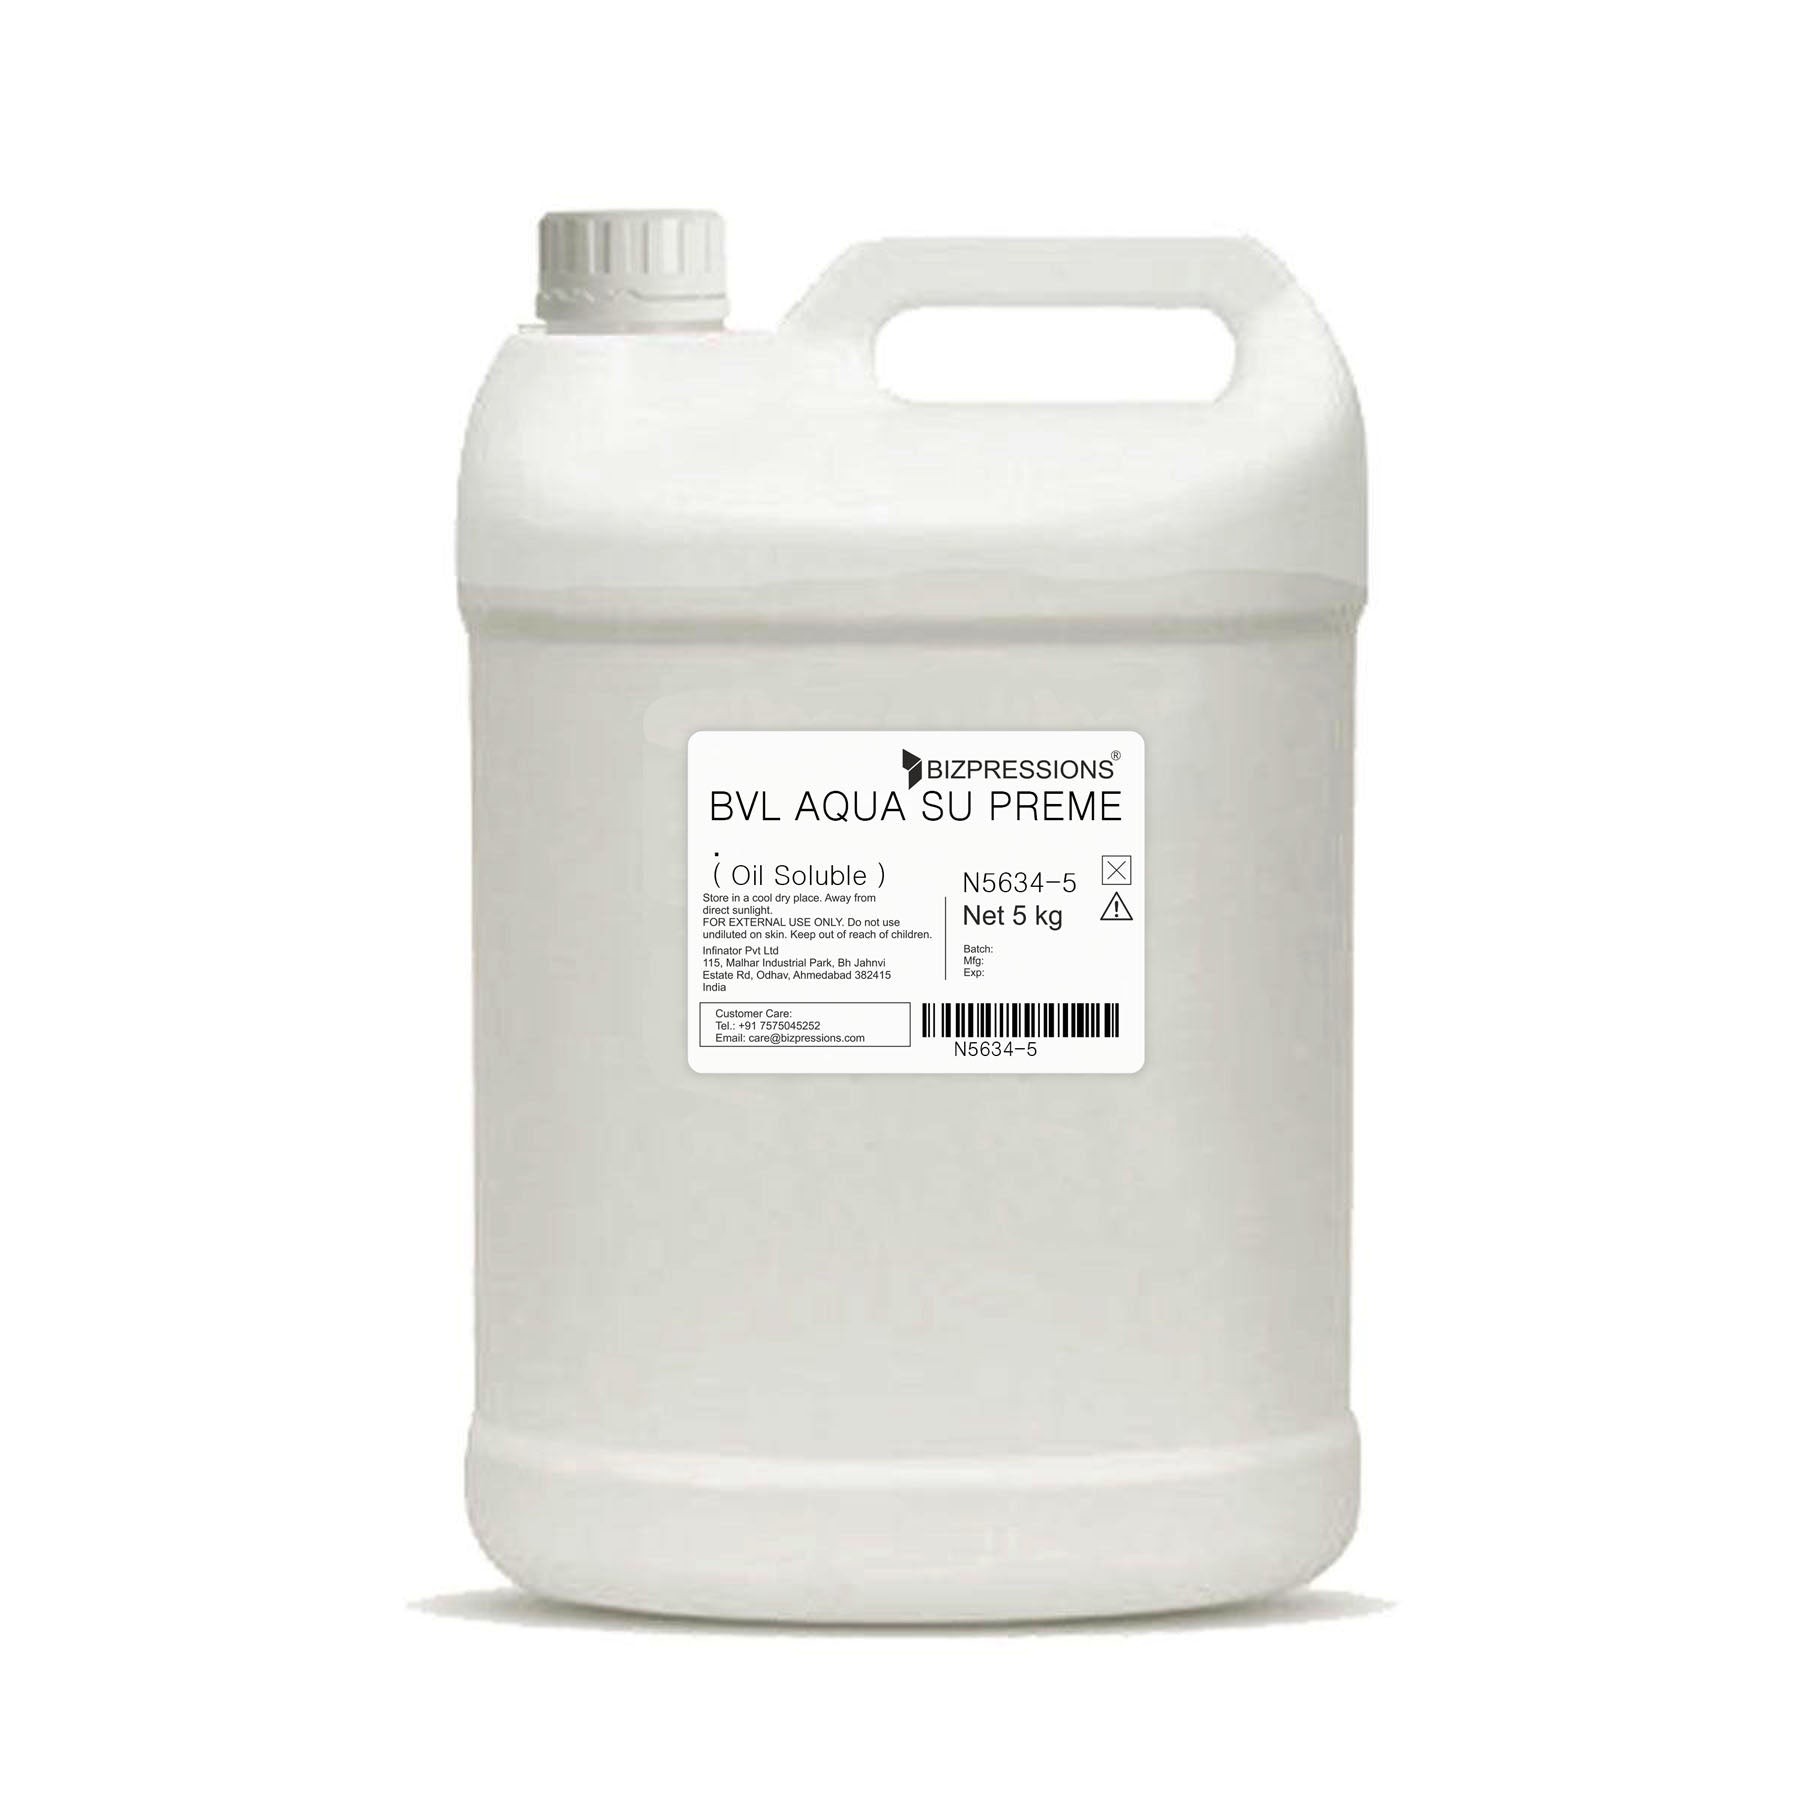 BVL AQUA SUPREME - Fragrance ( Oil Soluble ) - 5 kg